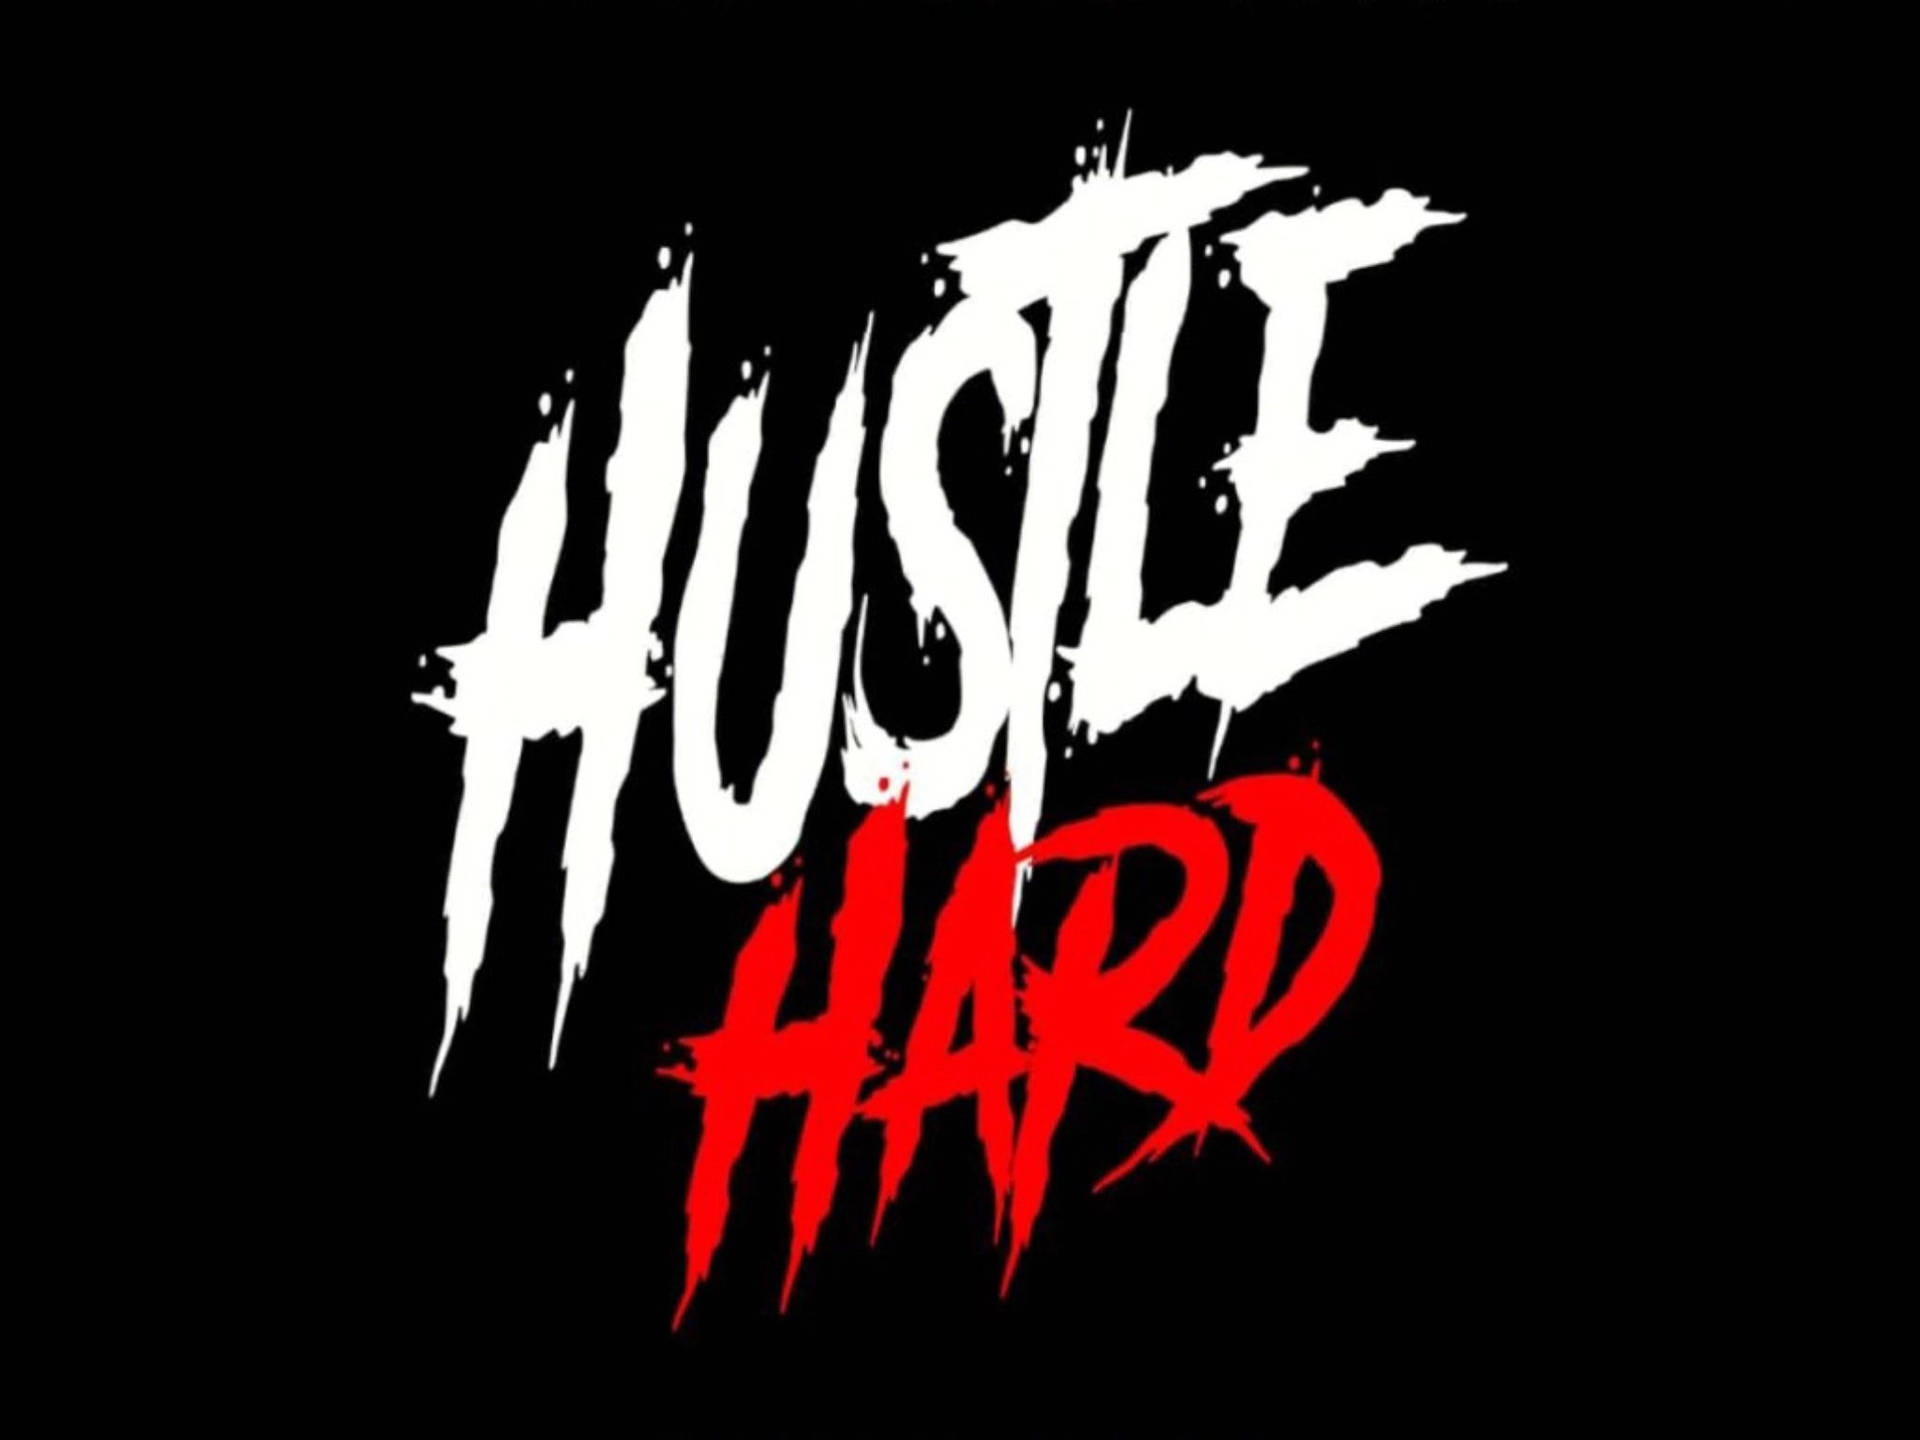 Free Hustle Hard Wallpaper Downloads, [100+] Hustle Hard Wallpapers for  FREE 